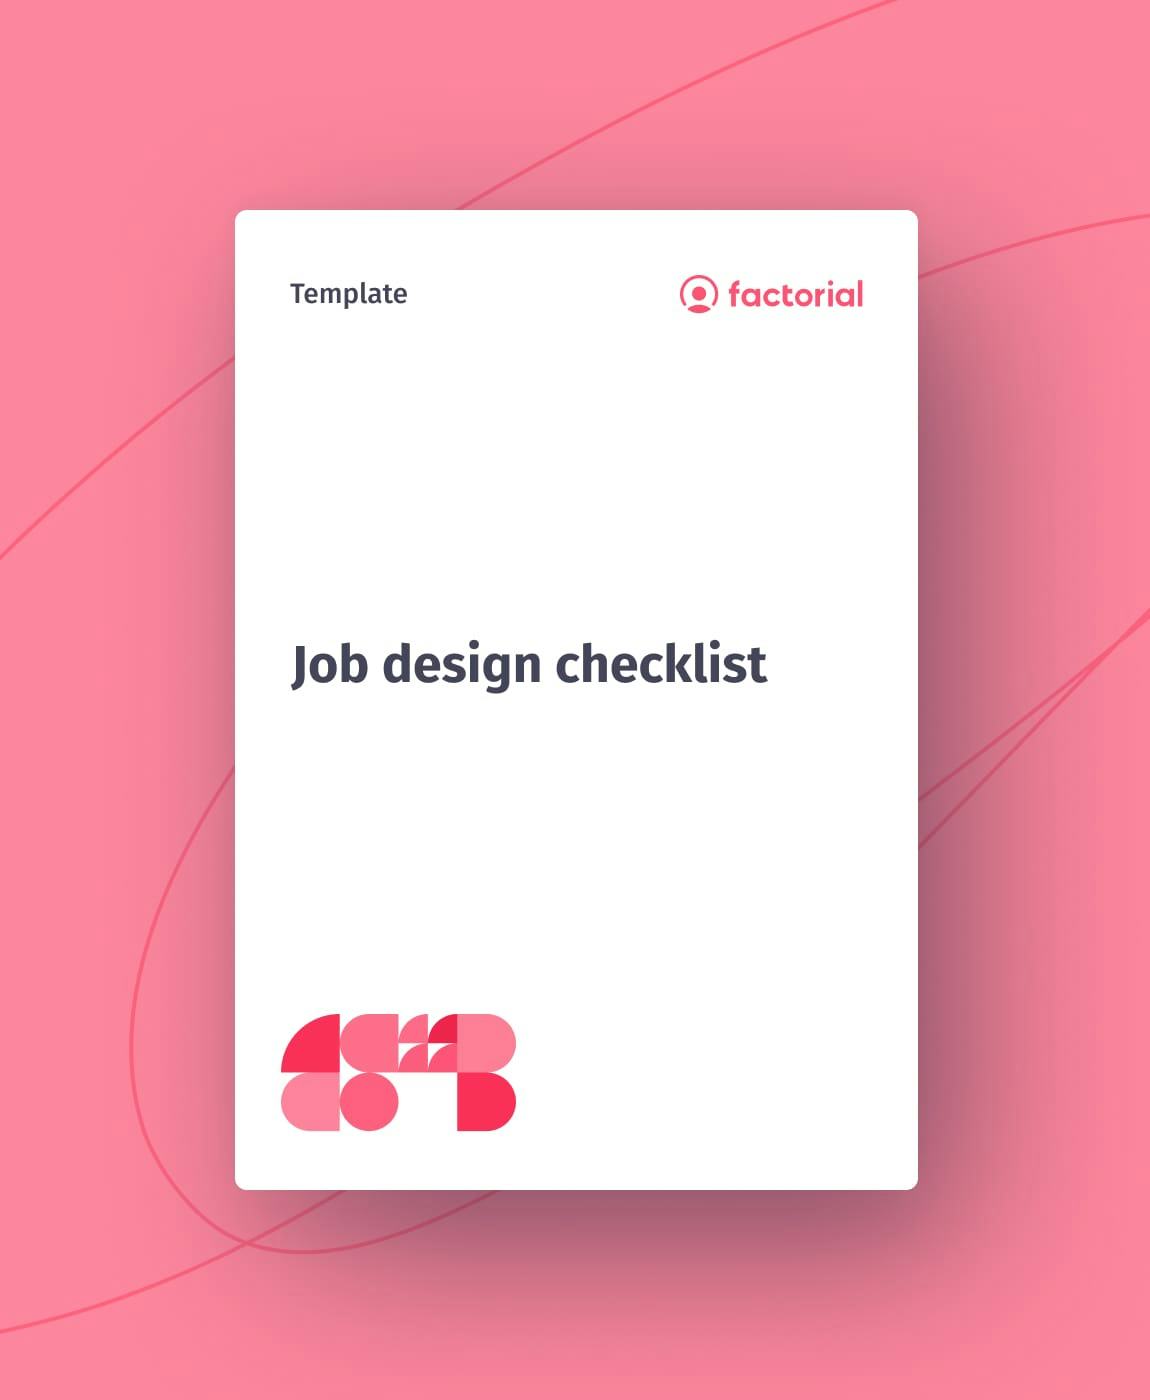 Job design checklist